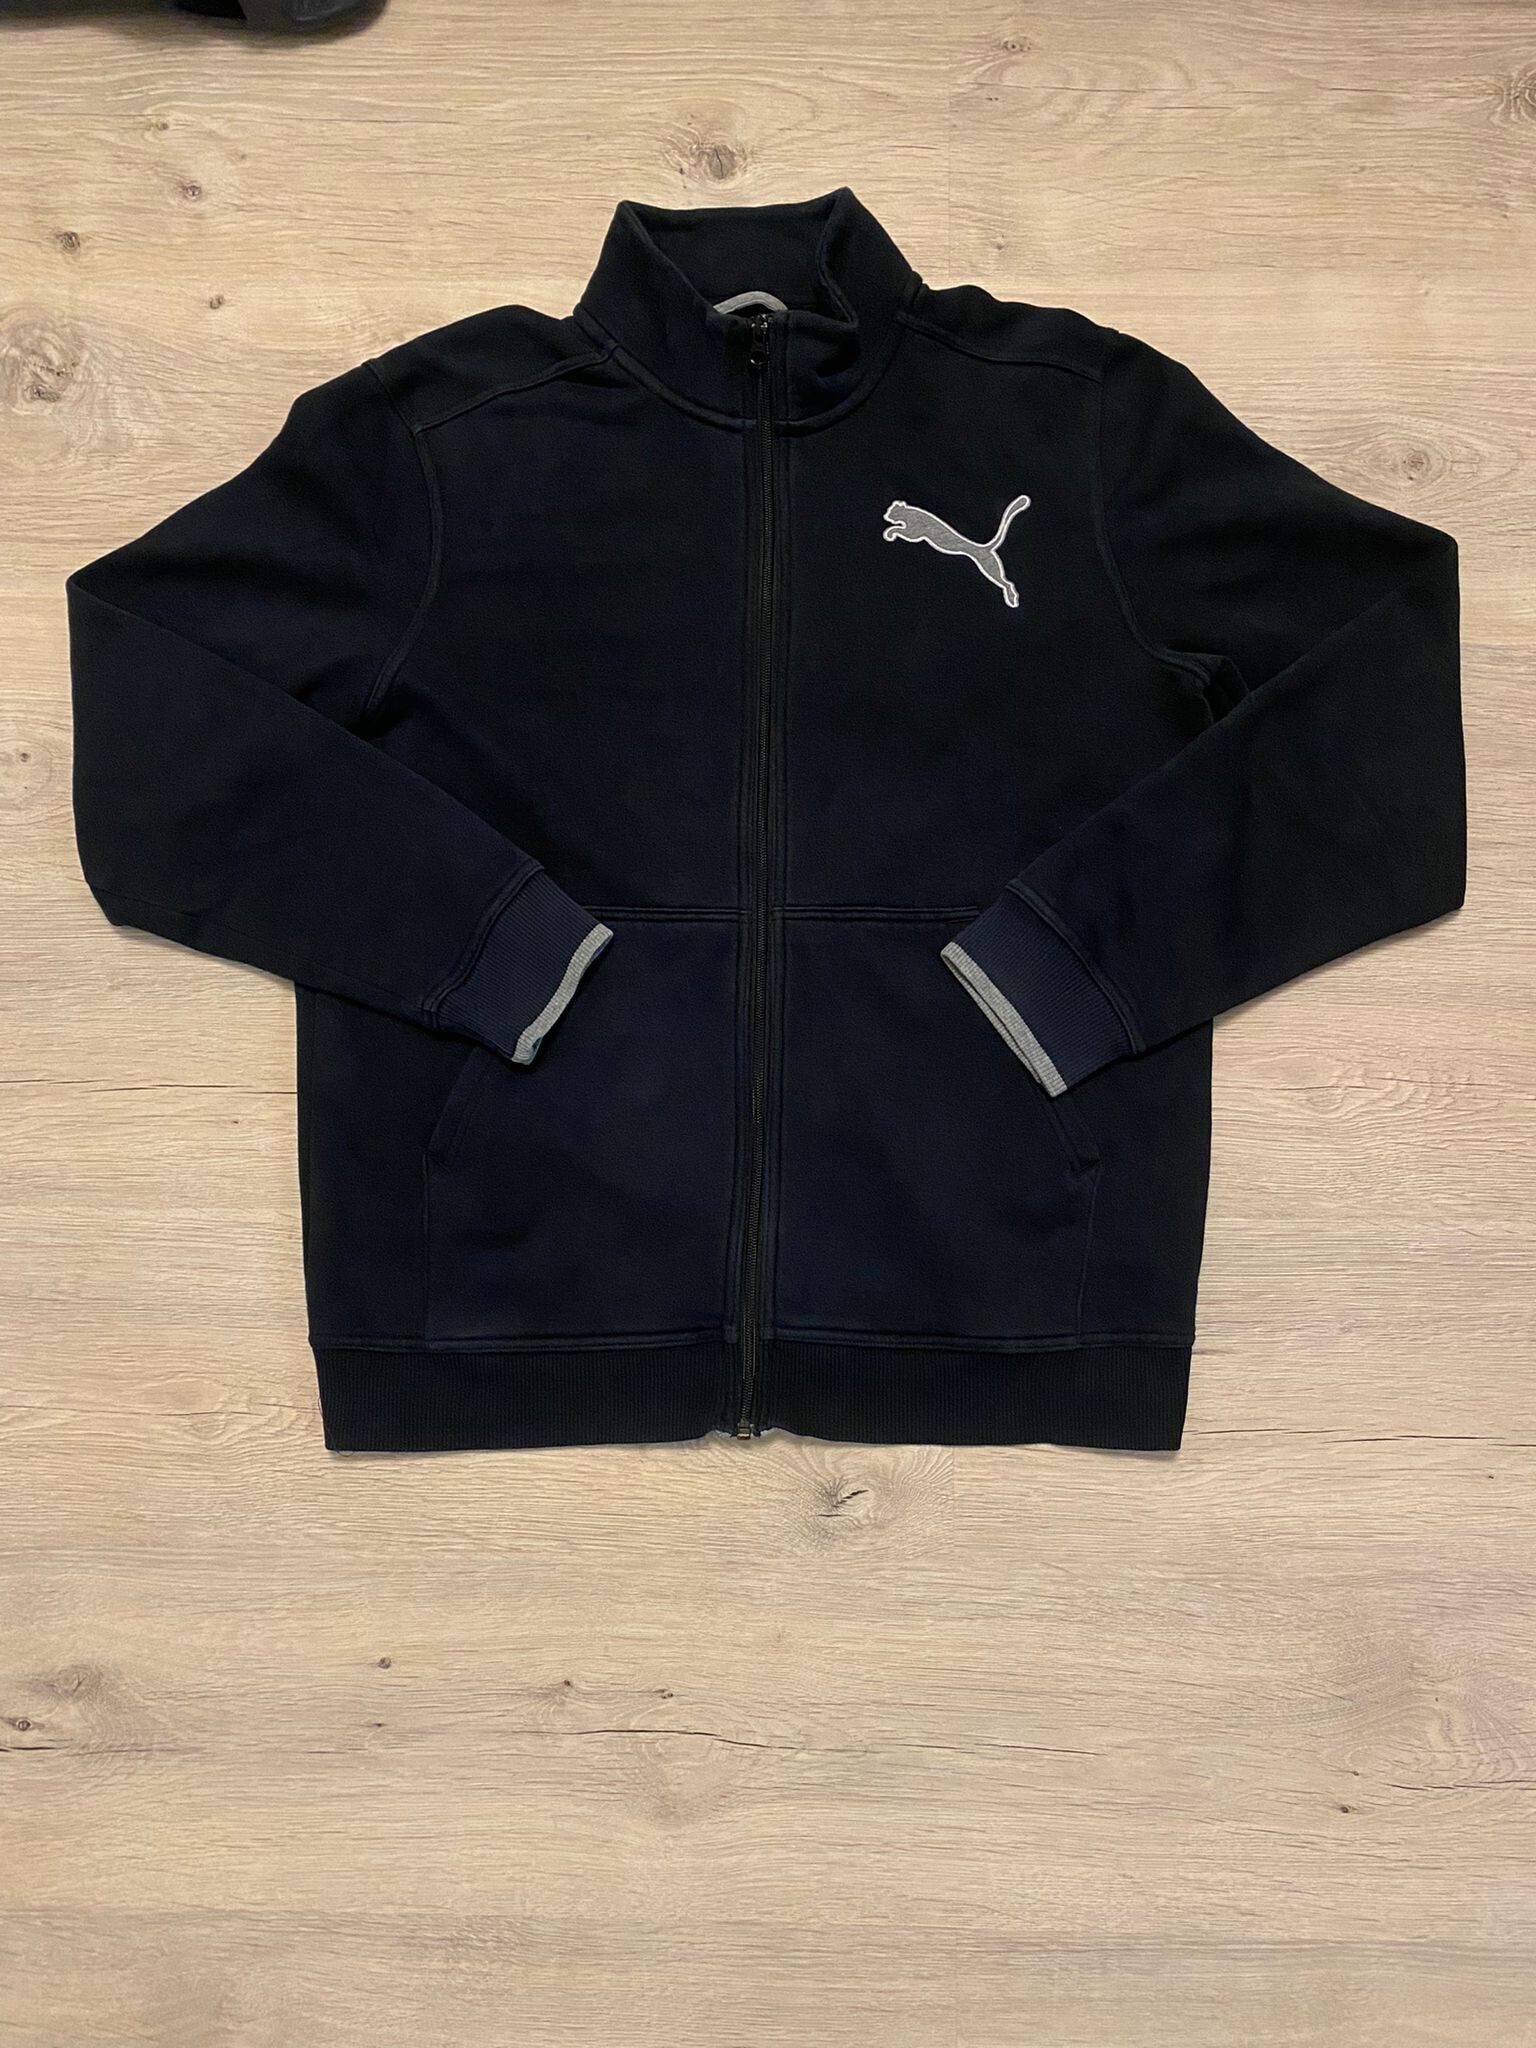 Puma Puma zip hoodie | Grailed